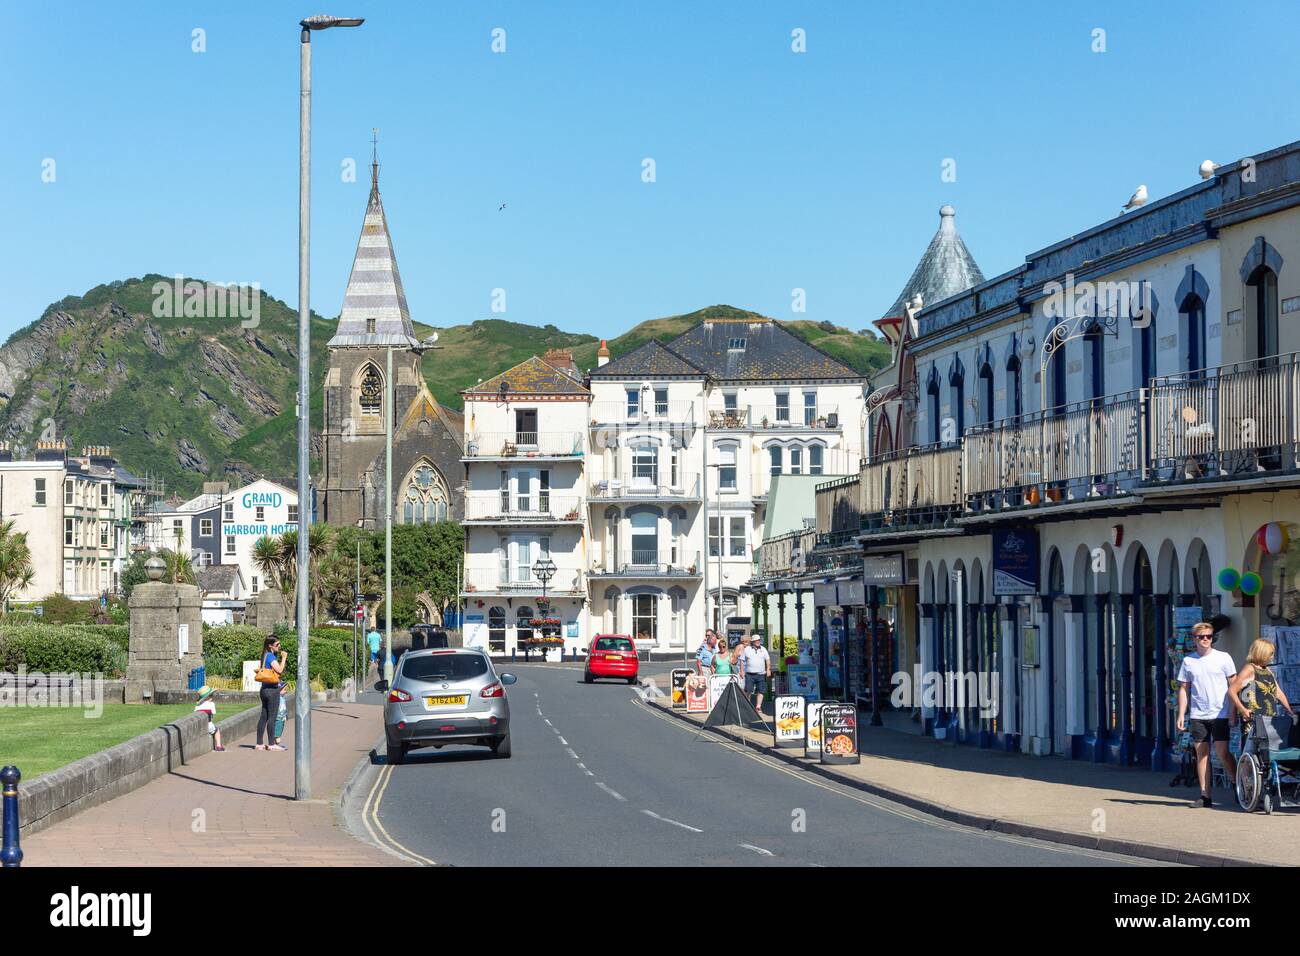 Seafront promenade, Ilfracombe, Devon, England, United Kingdom Stock Photo